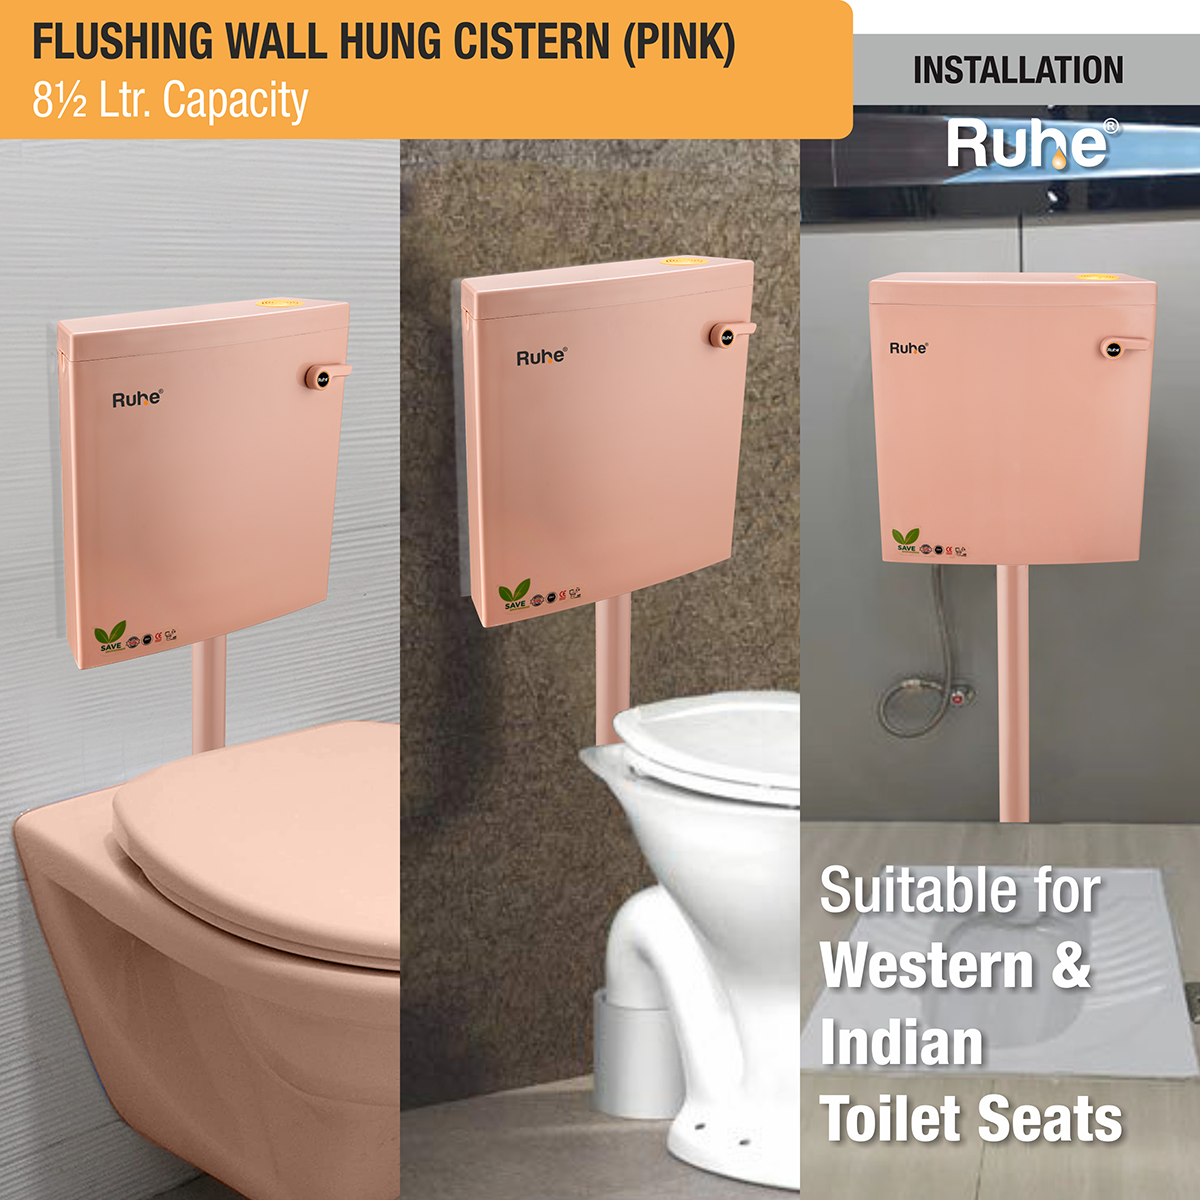 Flushing Wall Hung Cistern 8.5 Ltr. (Pink) installation